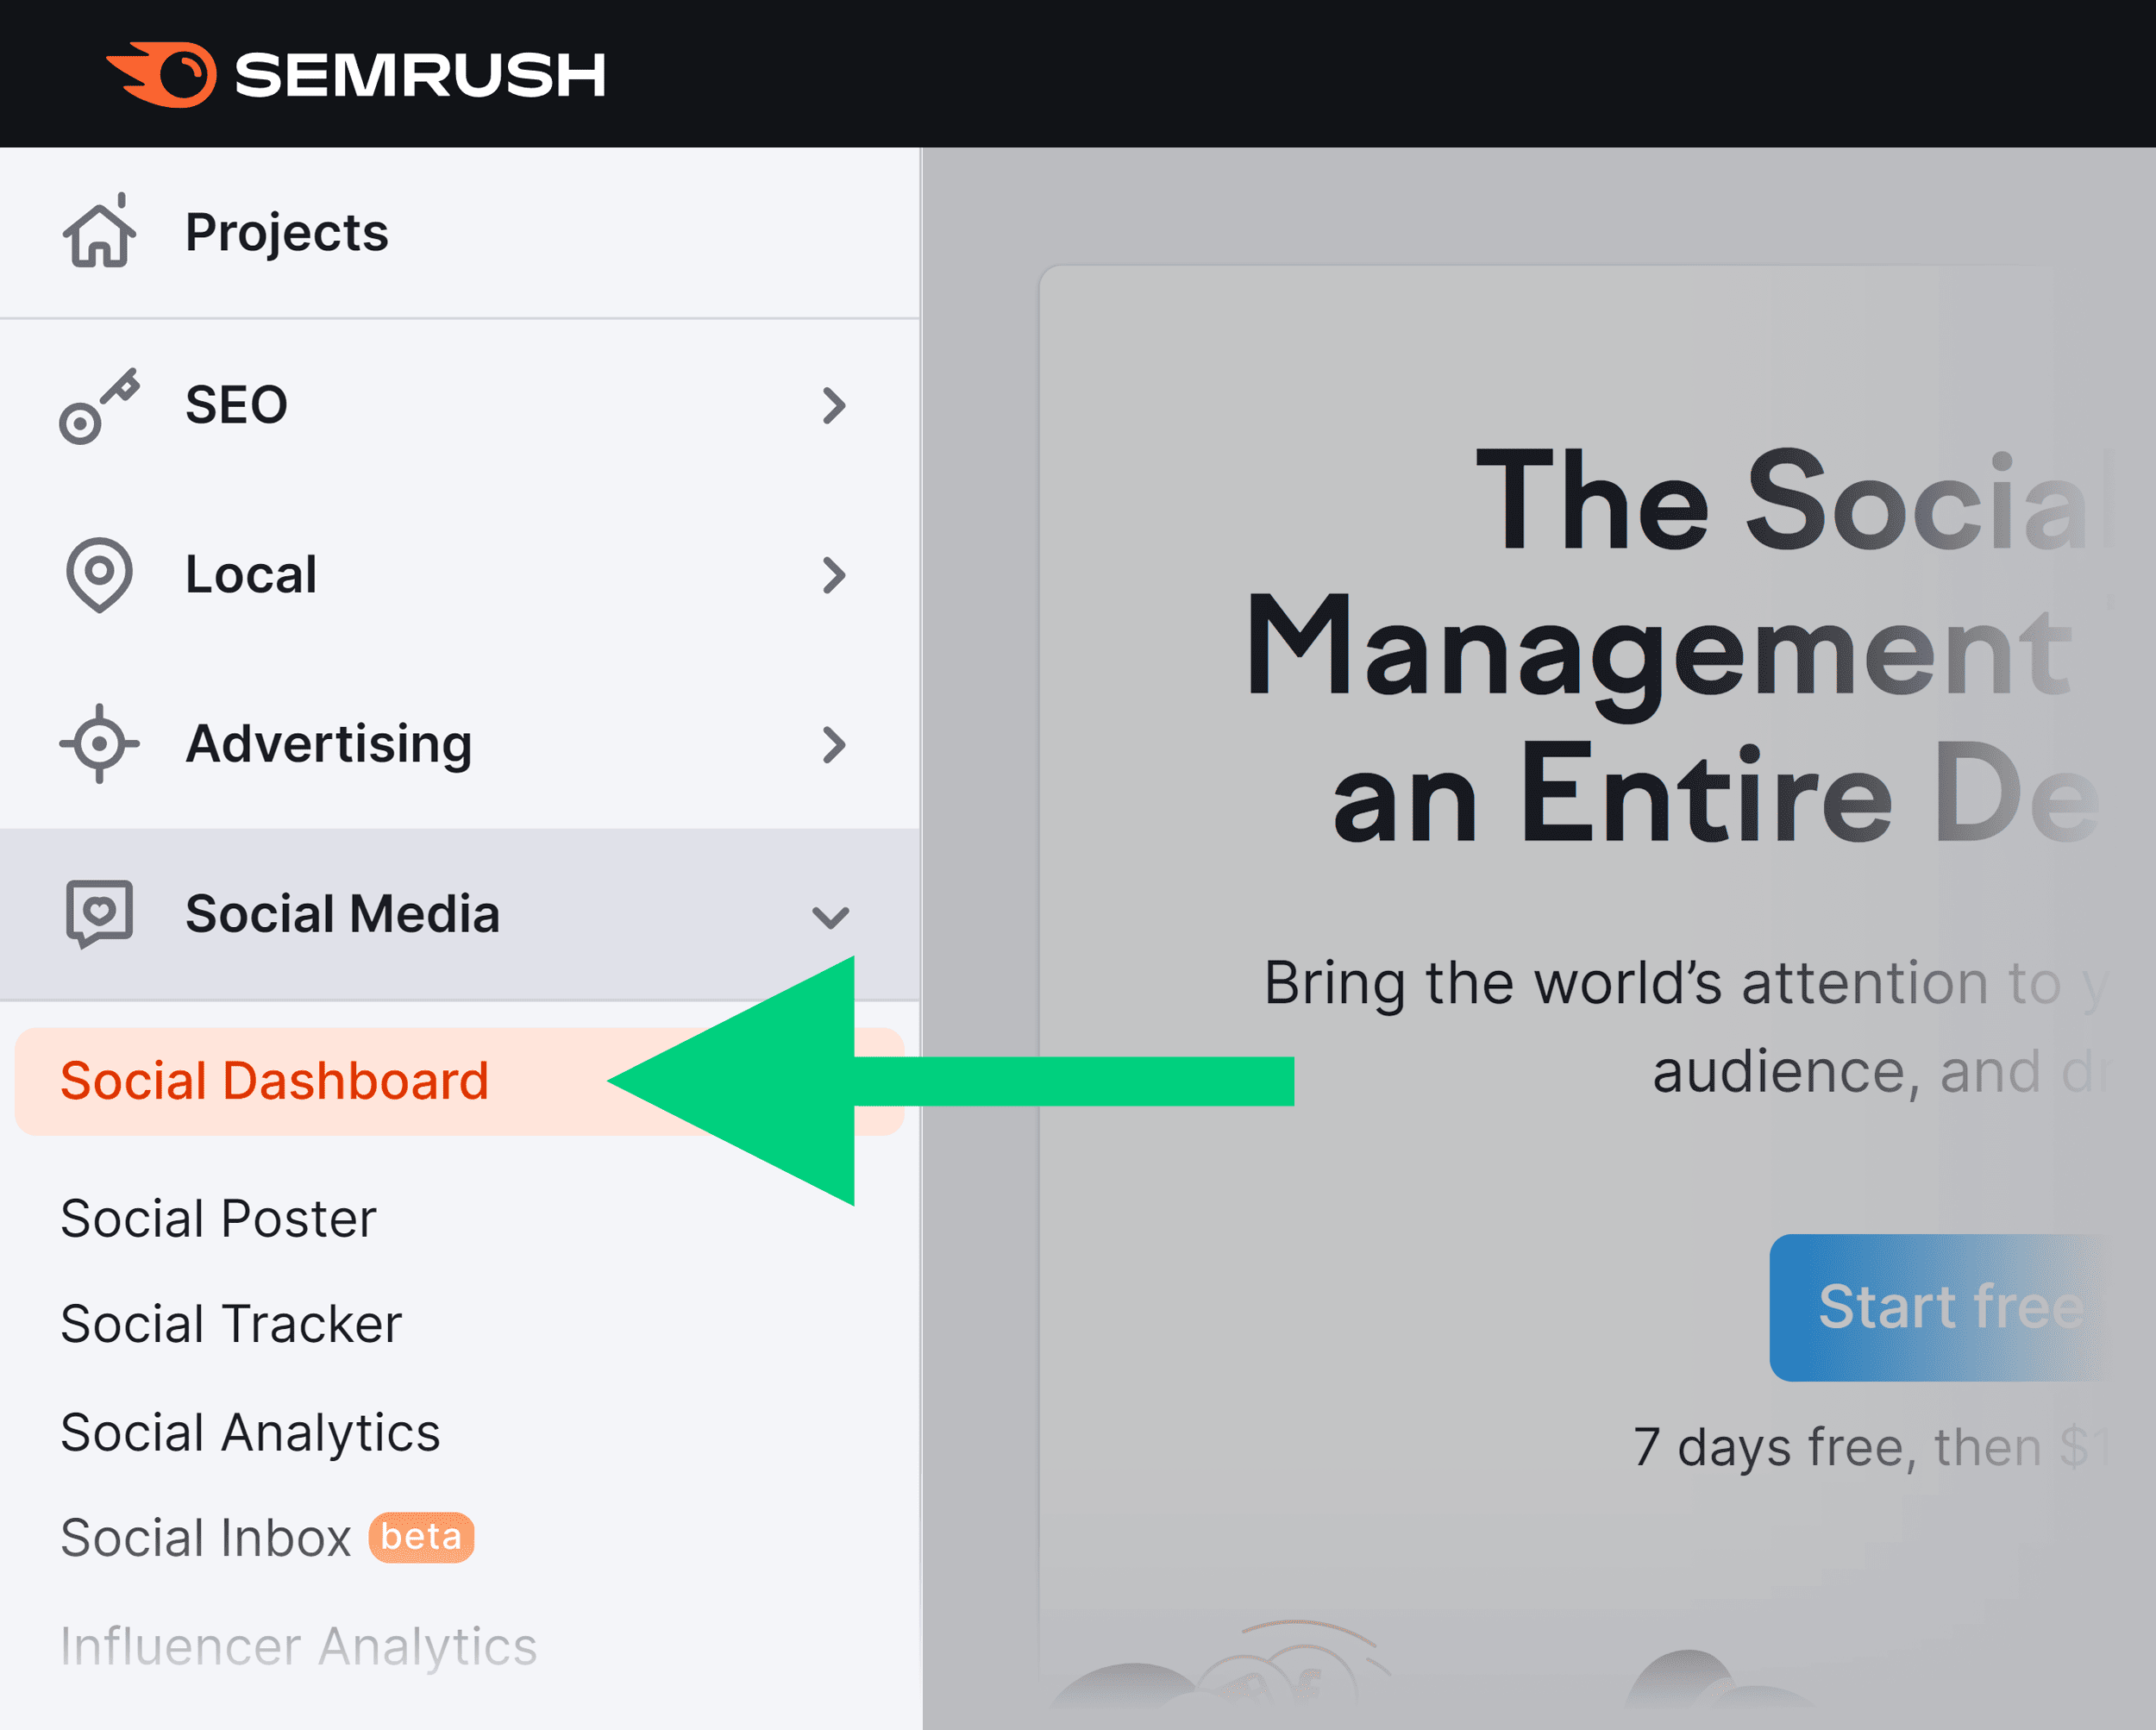 Semrush – Social Dashboard